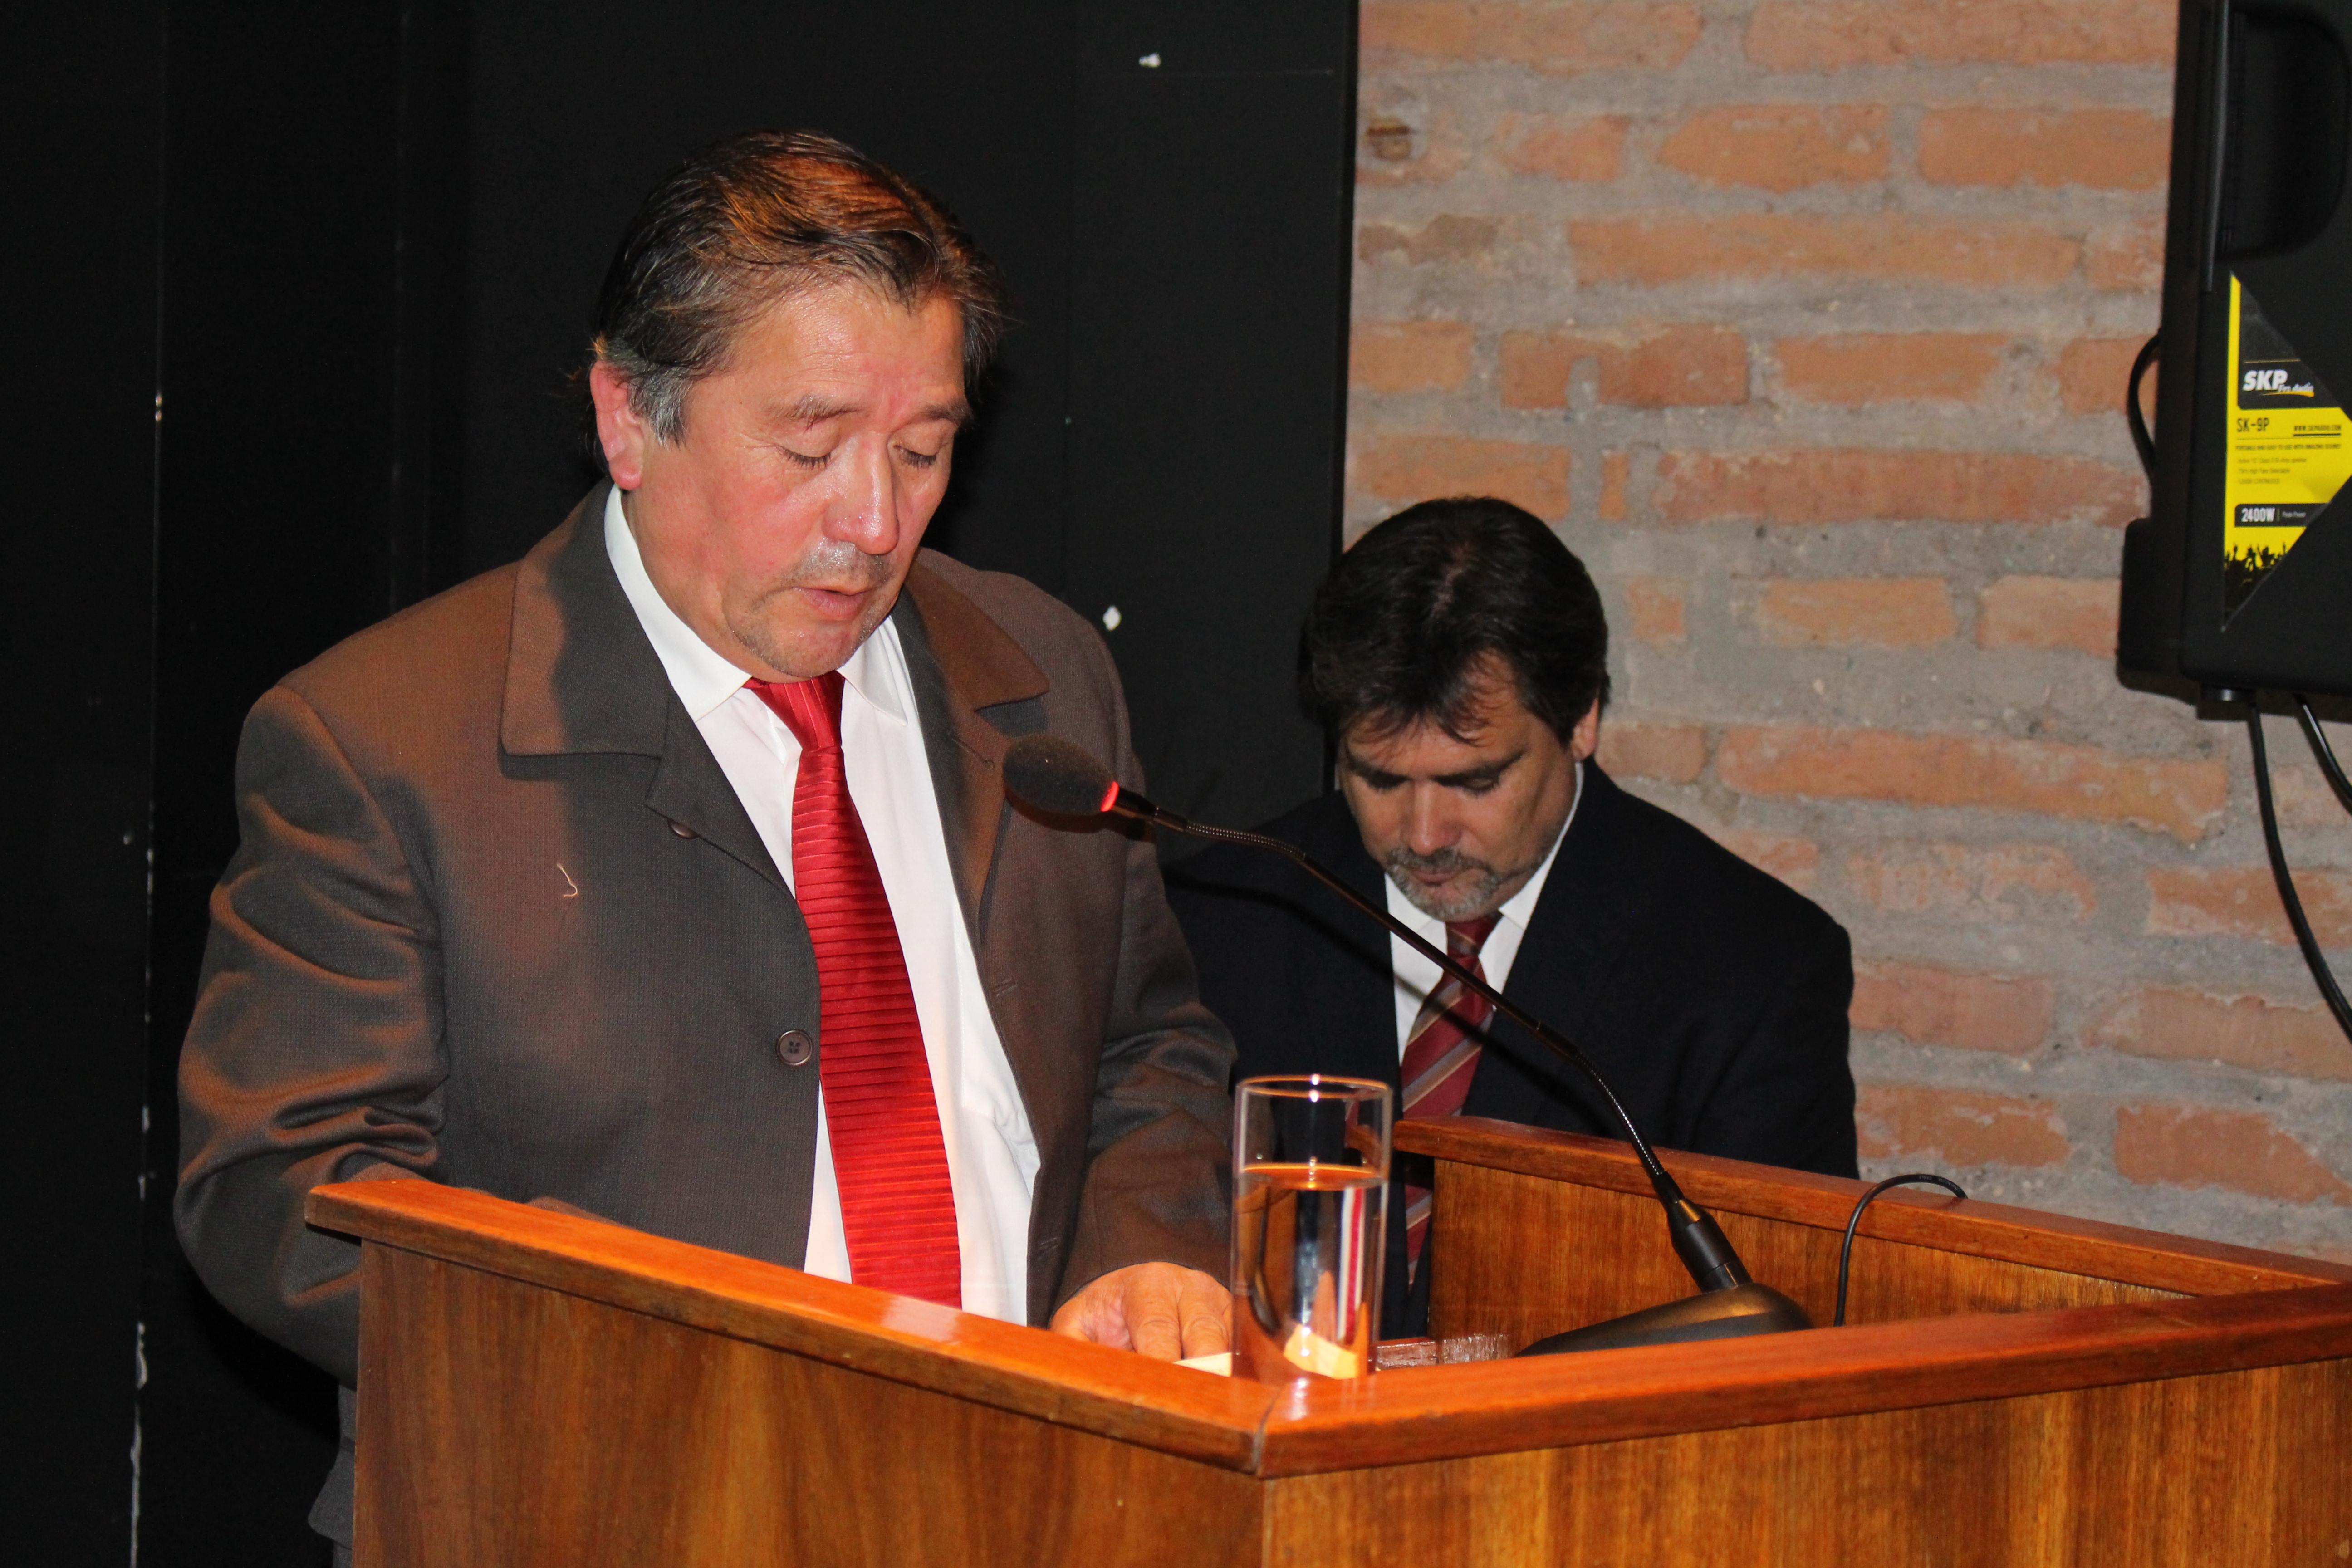 El graduado de Jefe de Obras, Pichiquil Huichaqueo, ofreció un discurso al cierre de la ceremonia.